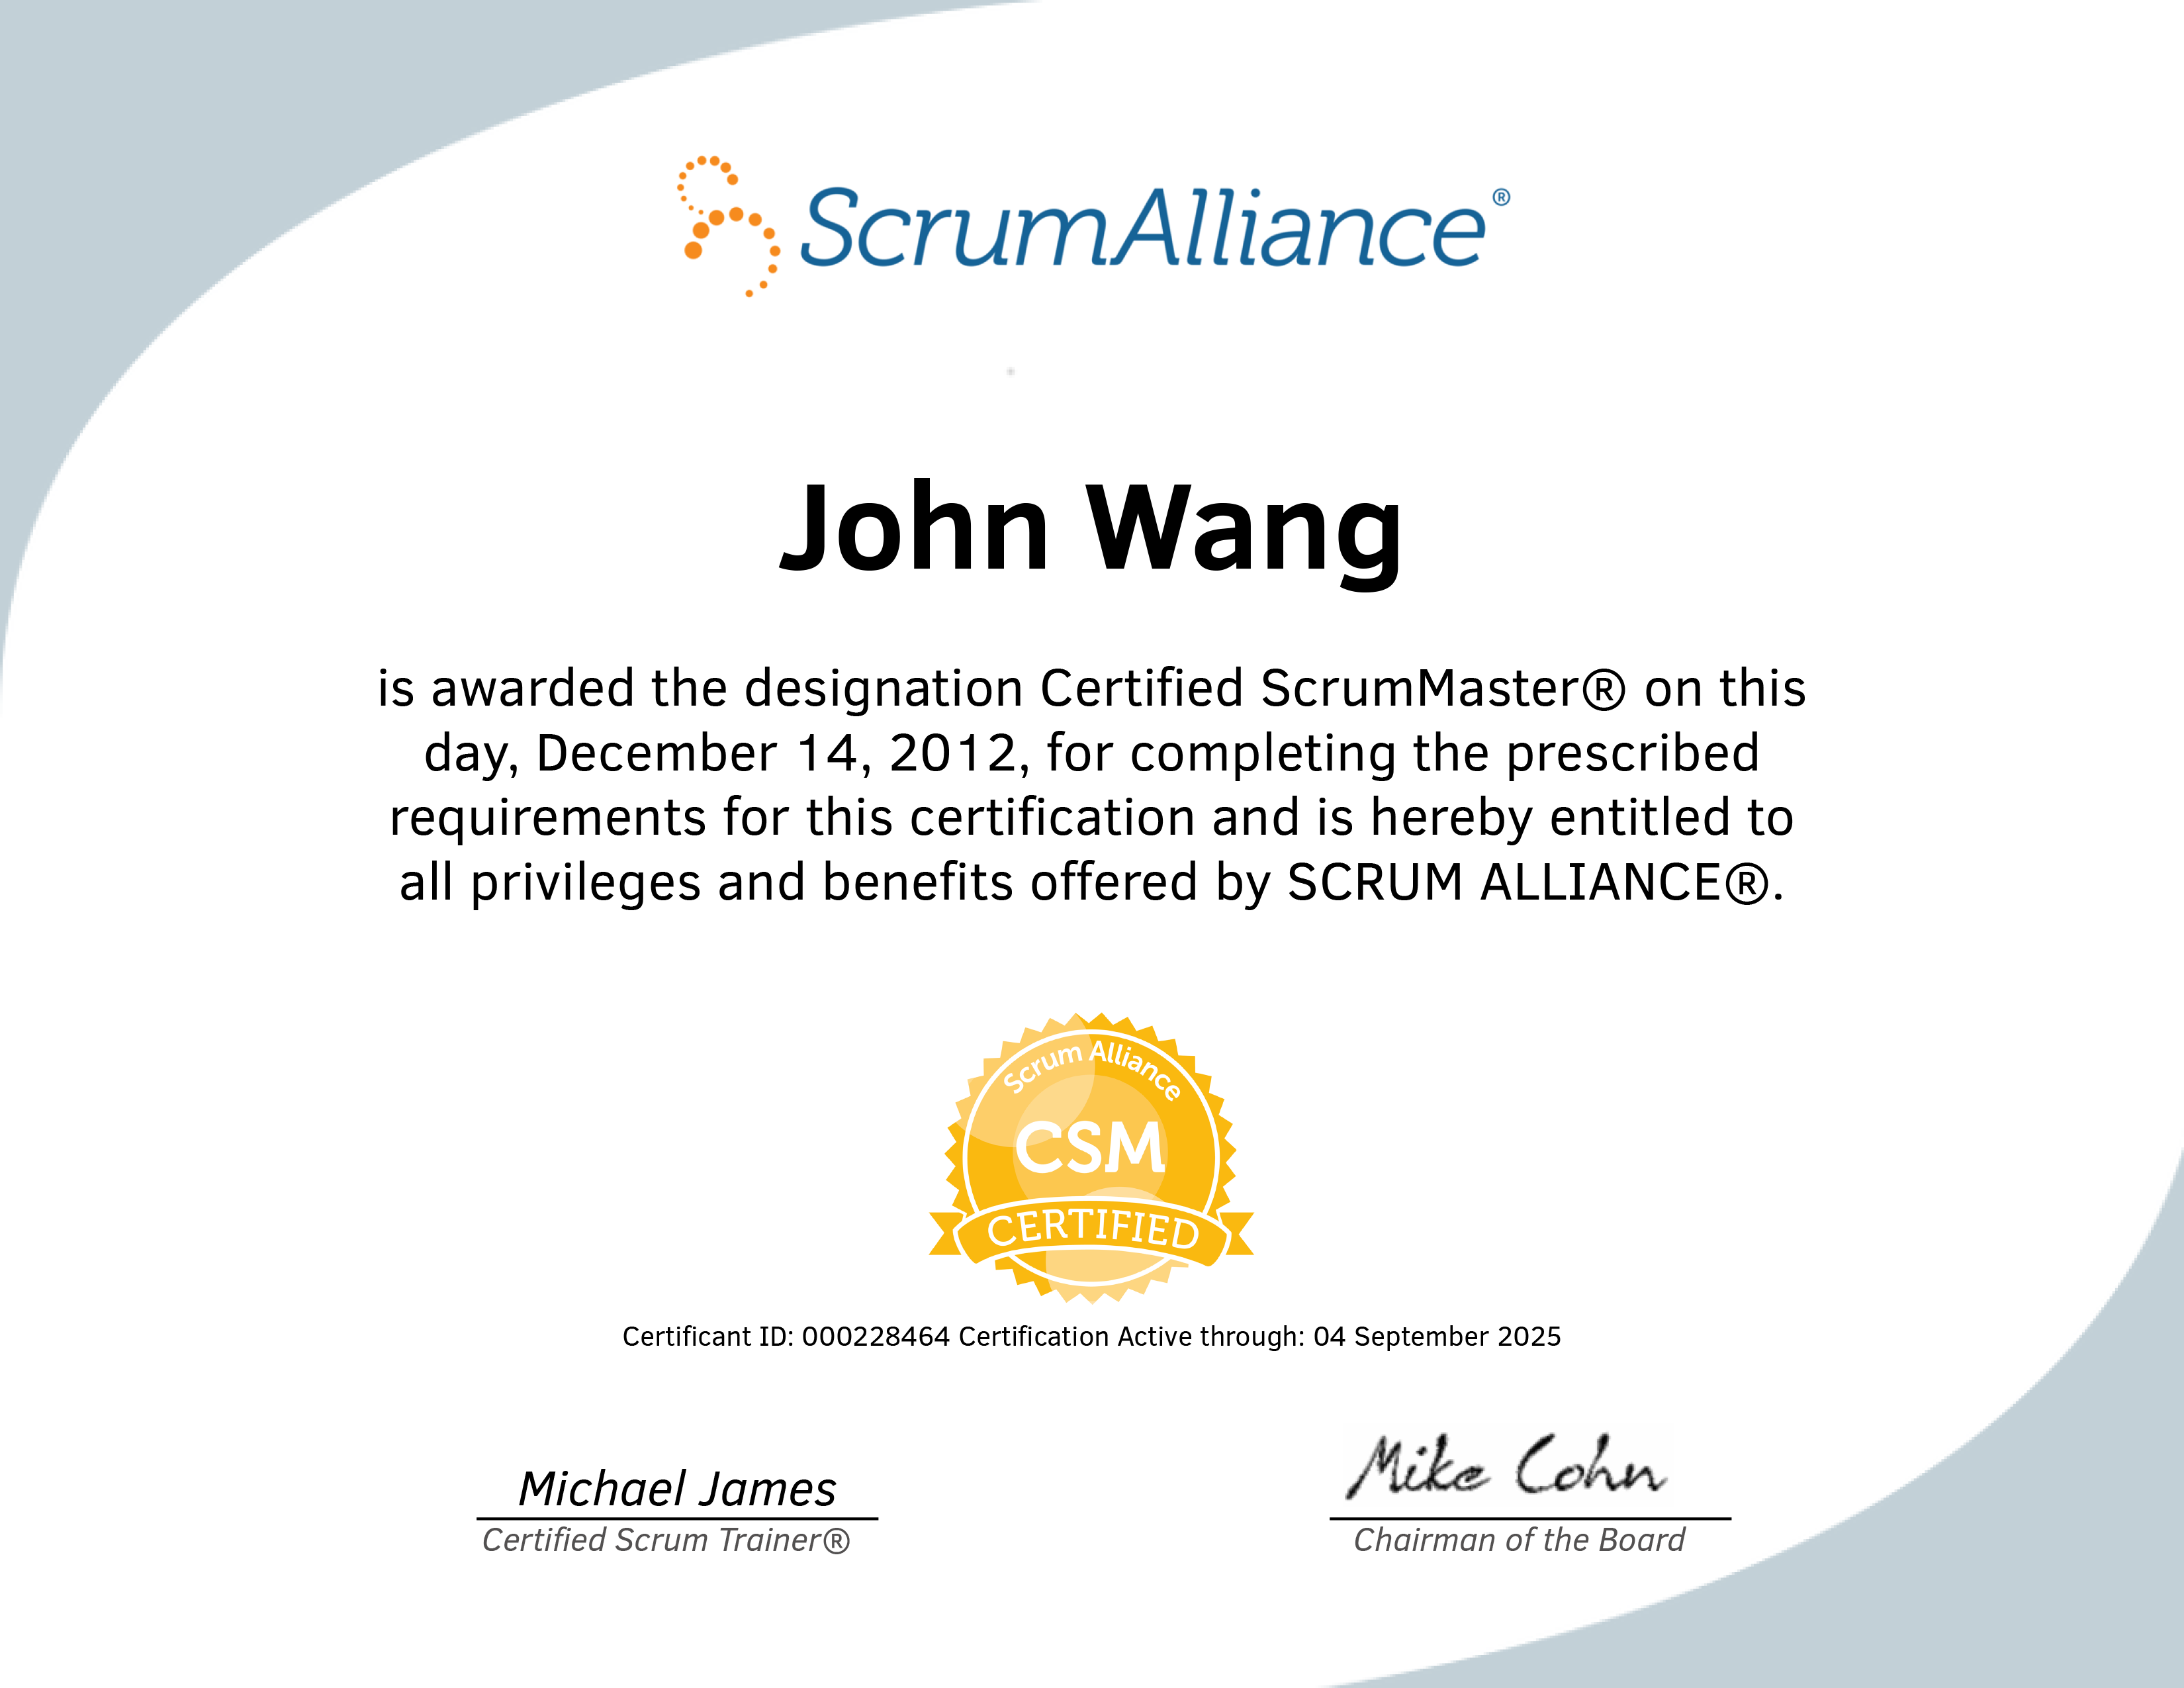 John's Certified ScrumMaster (CSM) from Scrum Alliance